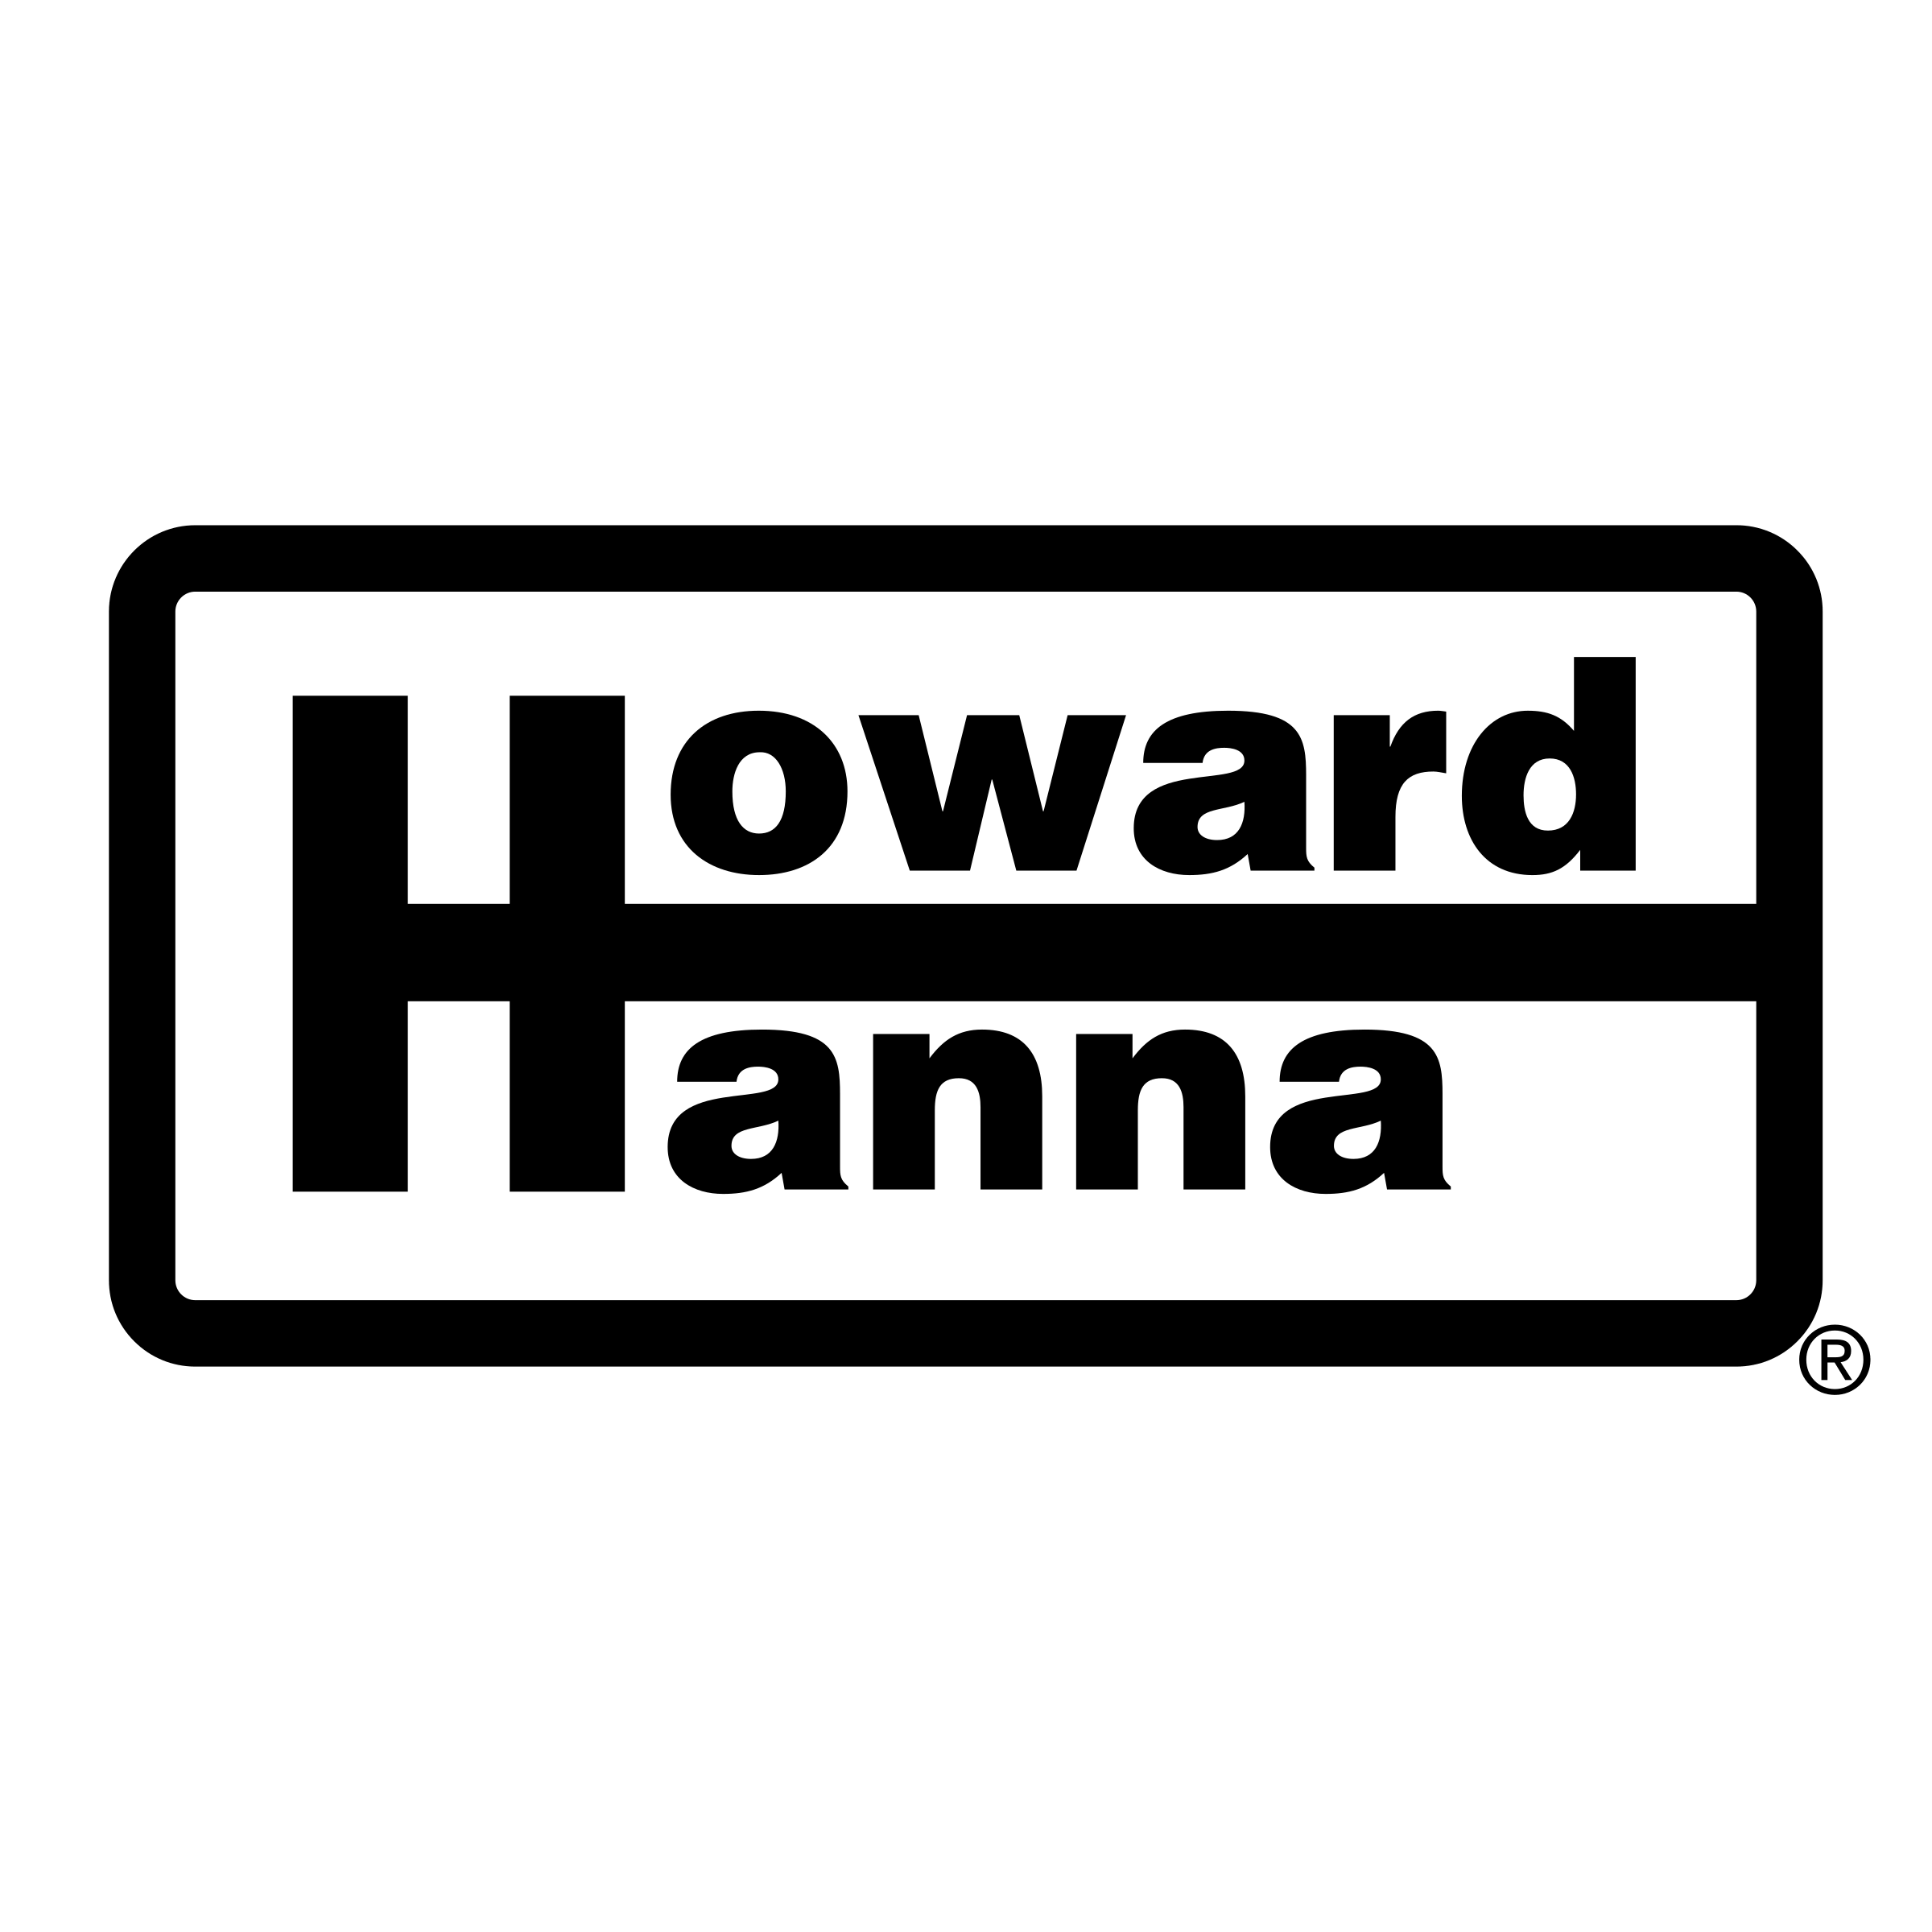 Howard Supply Logo - Howard Hanna Logo PNG Transparent & SVG Vector - Freebie Supply